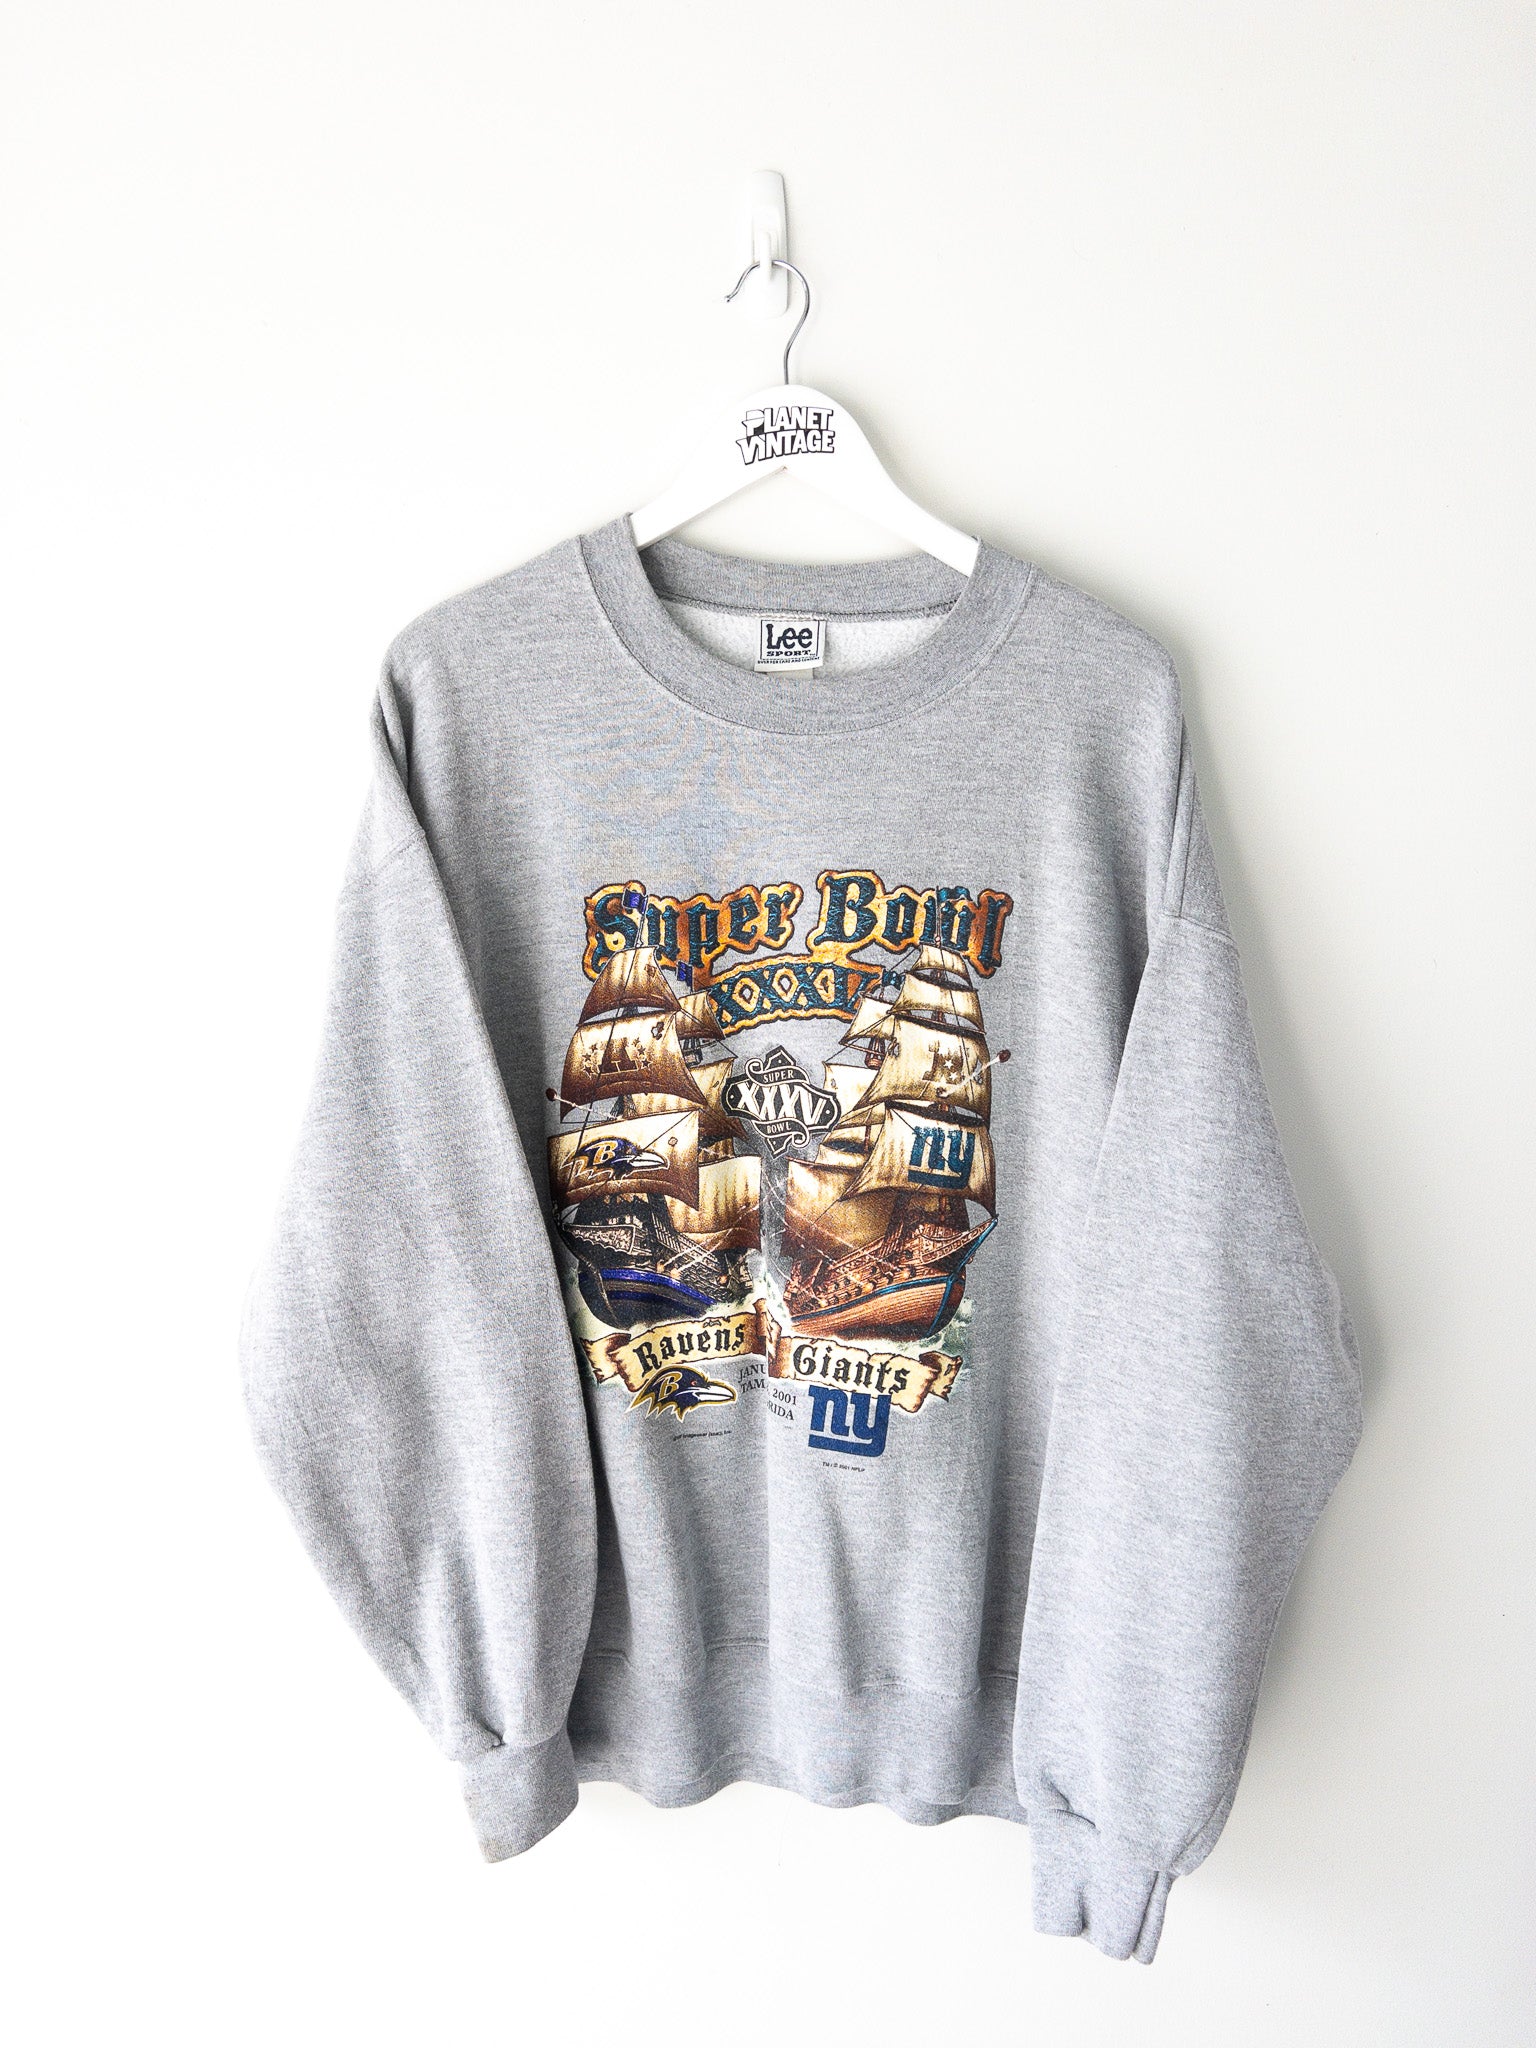 Vintage Super Bowl 2001 Sweatshirt (XL)